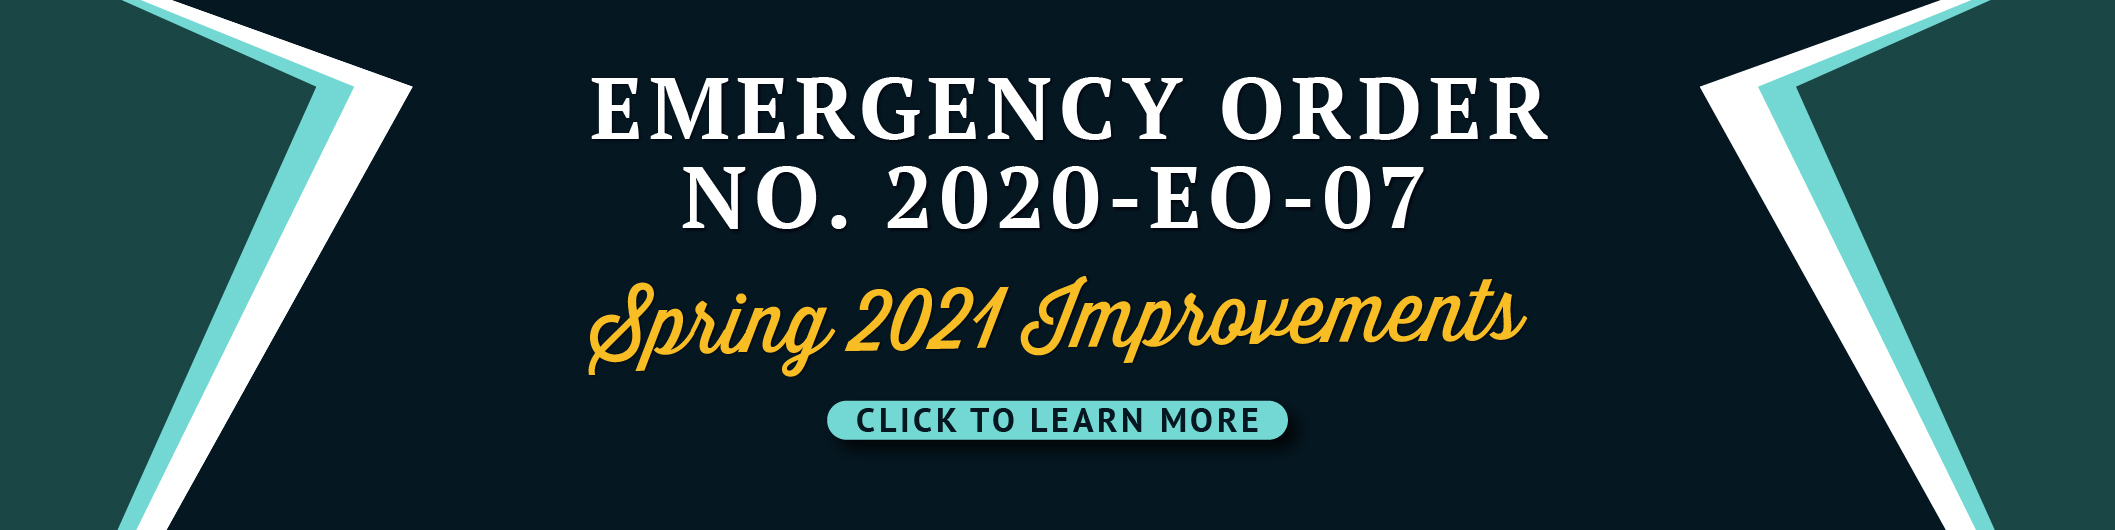 Emergency Order No. 2020-EO-07 - Spring 2021 Improvements